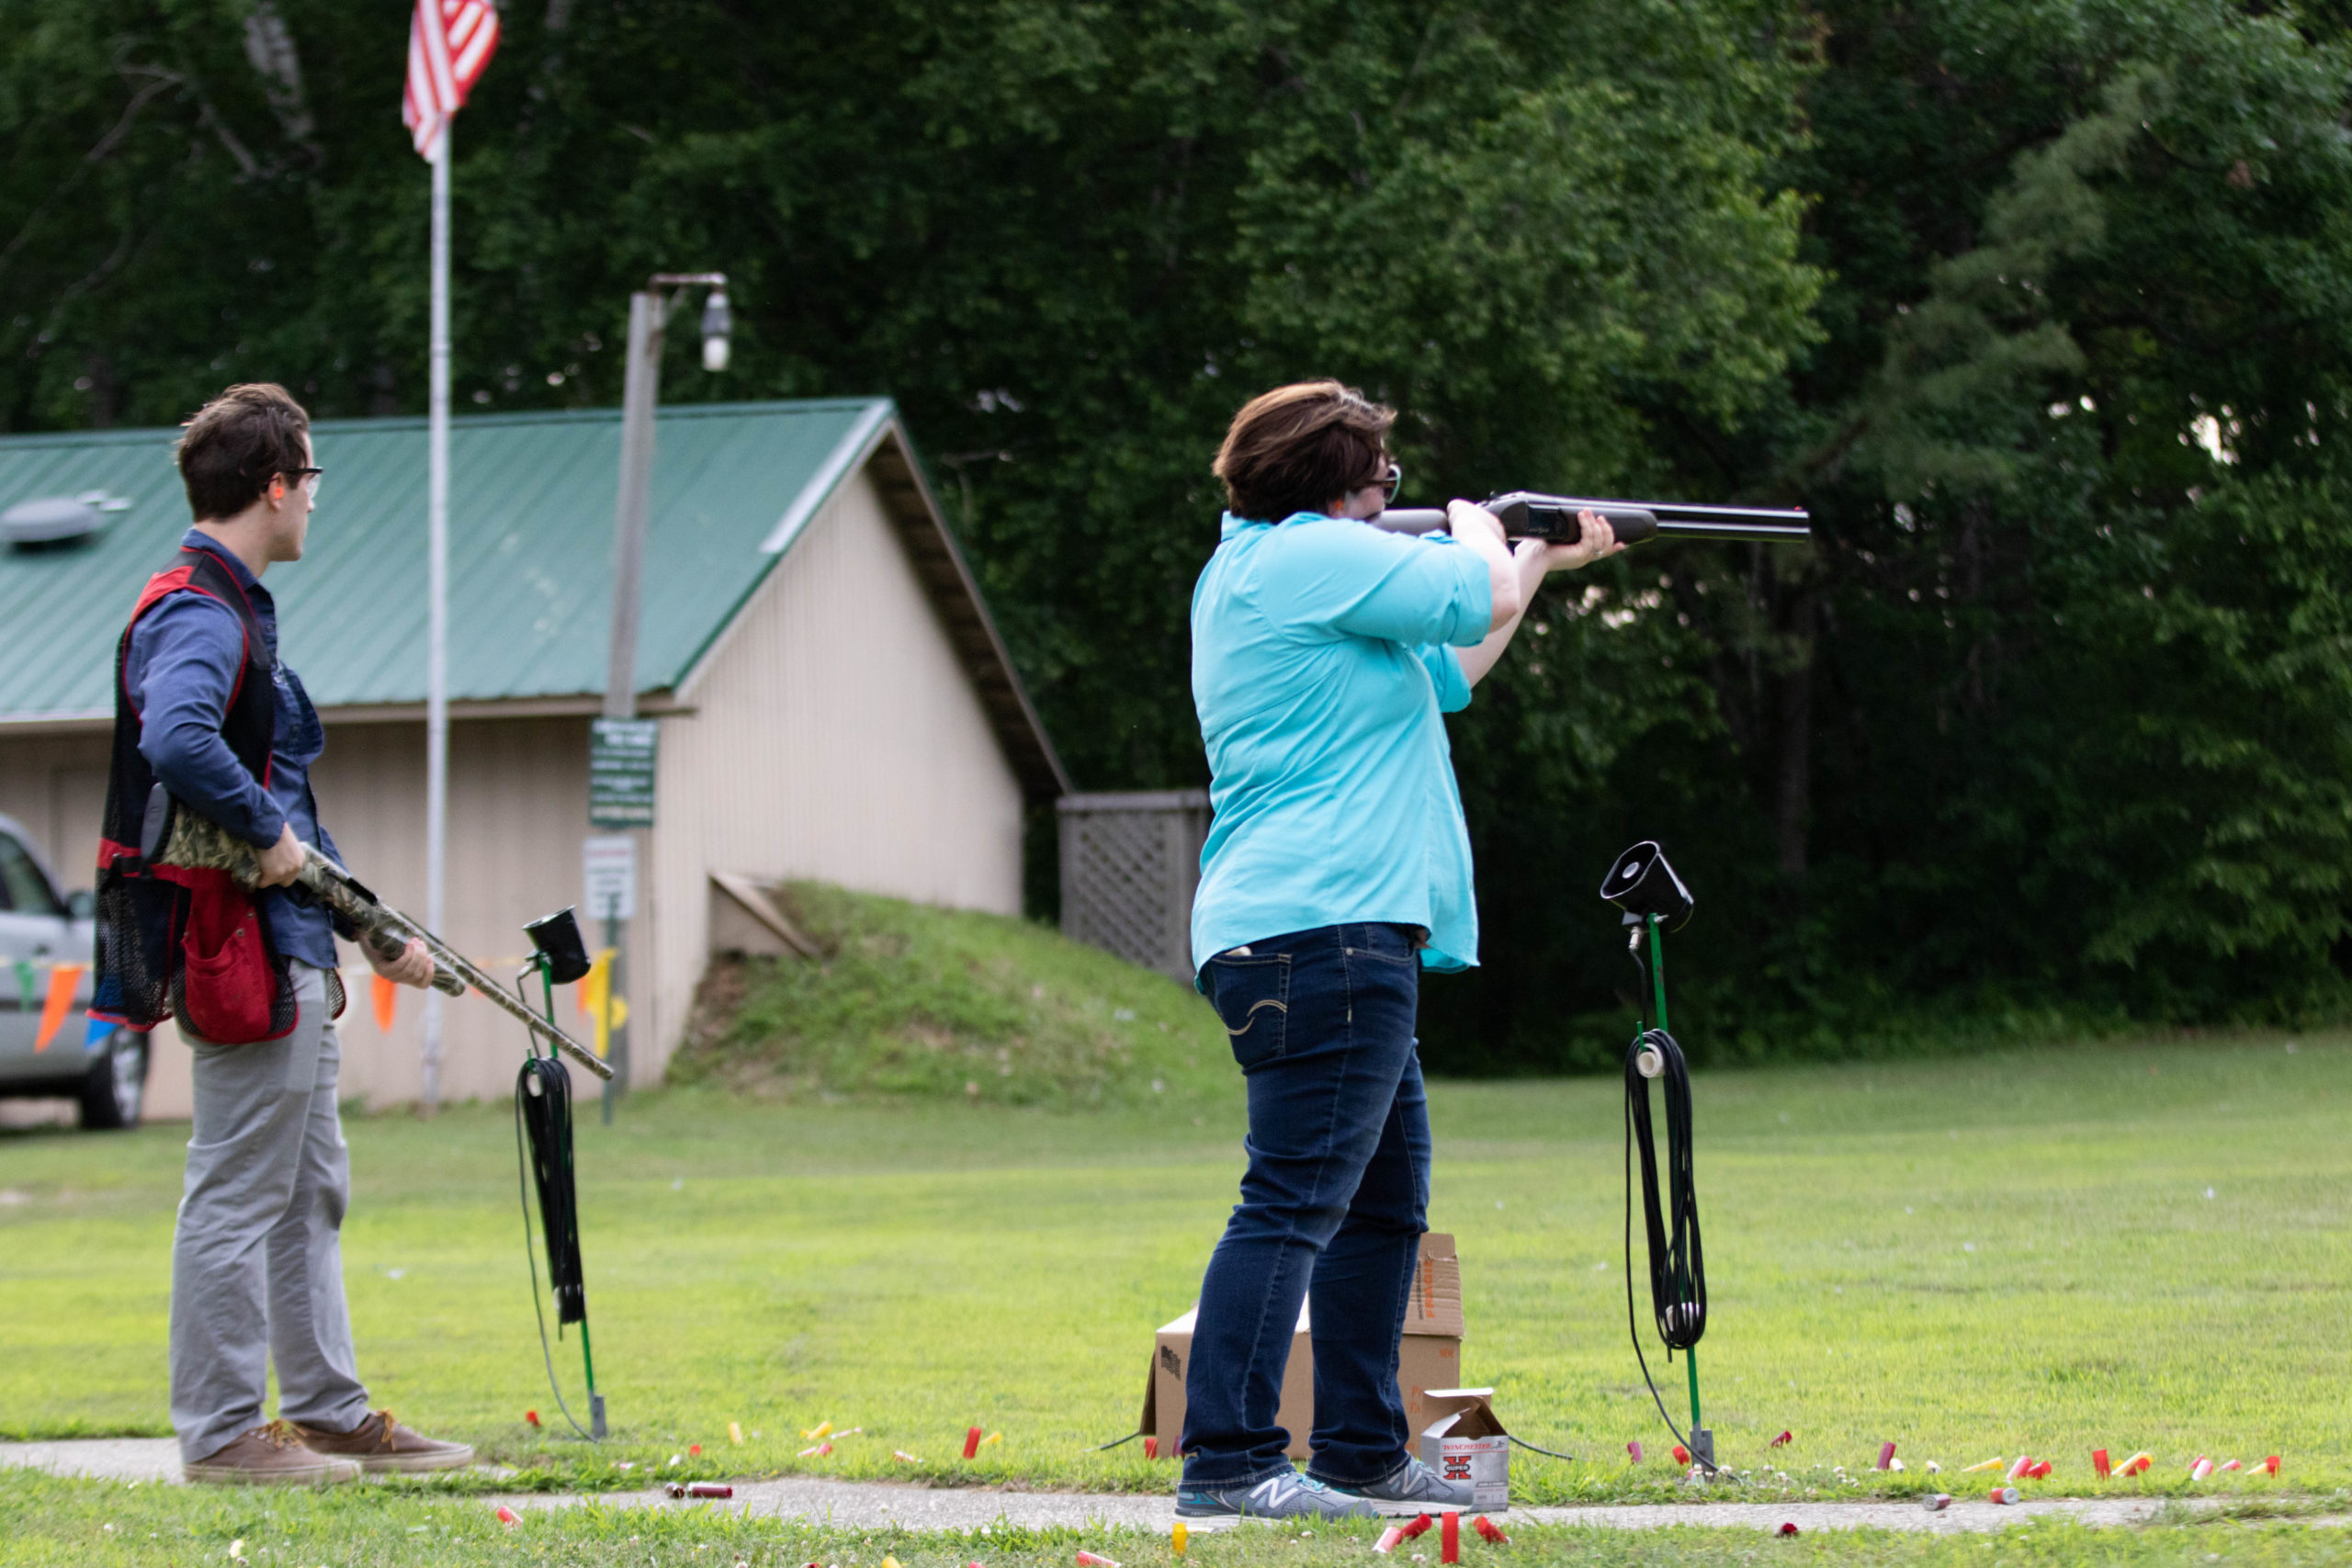 Recreational Shooting Range